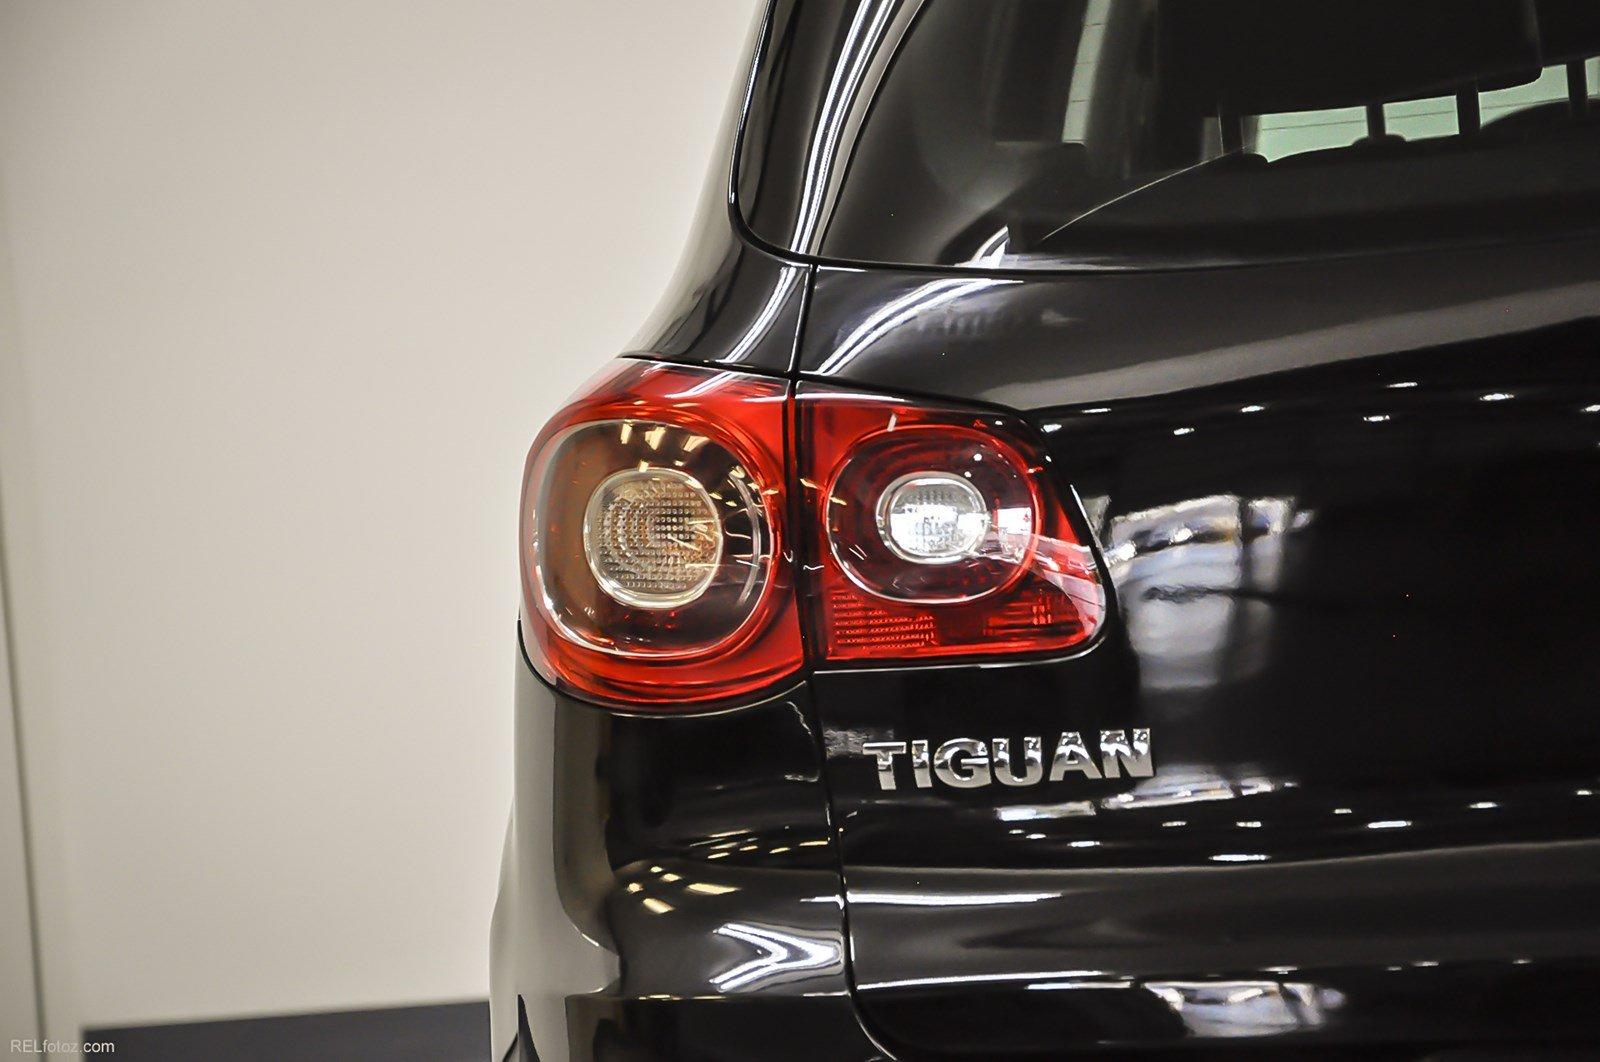 Used 2010 Volkswagen Tiguan SEL for sale Sold at Gravity Autos Marietta in Marietta GA 30060 6